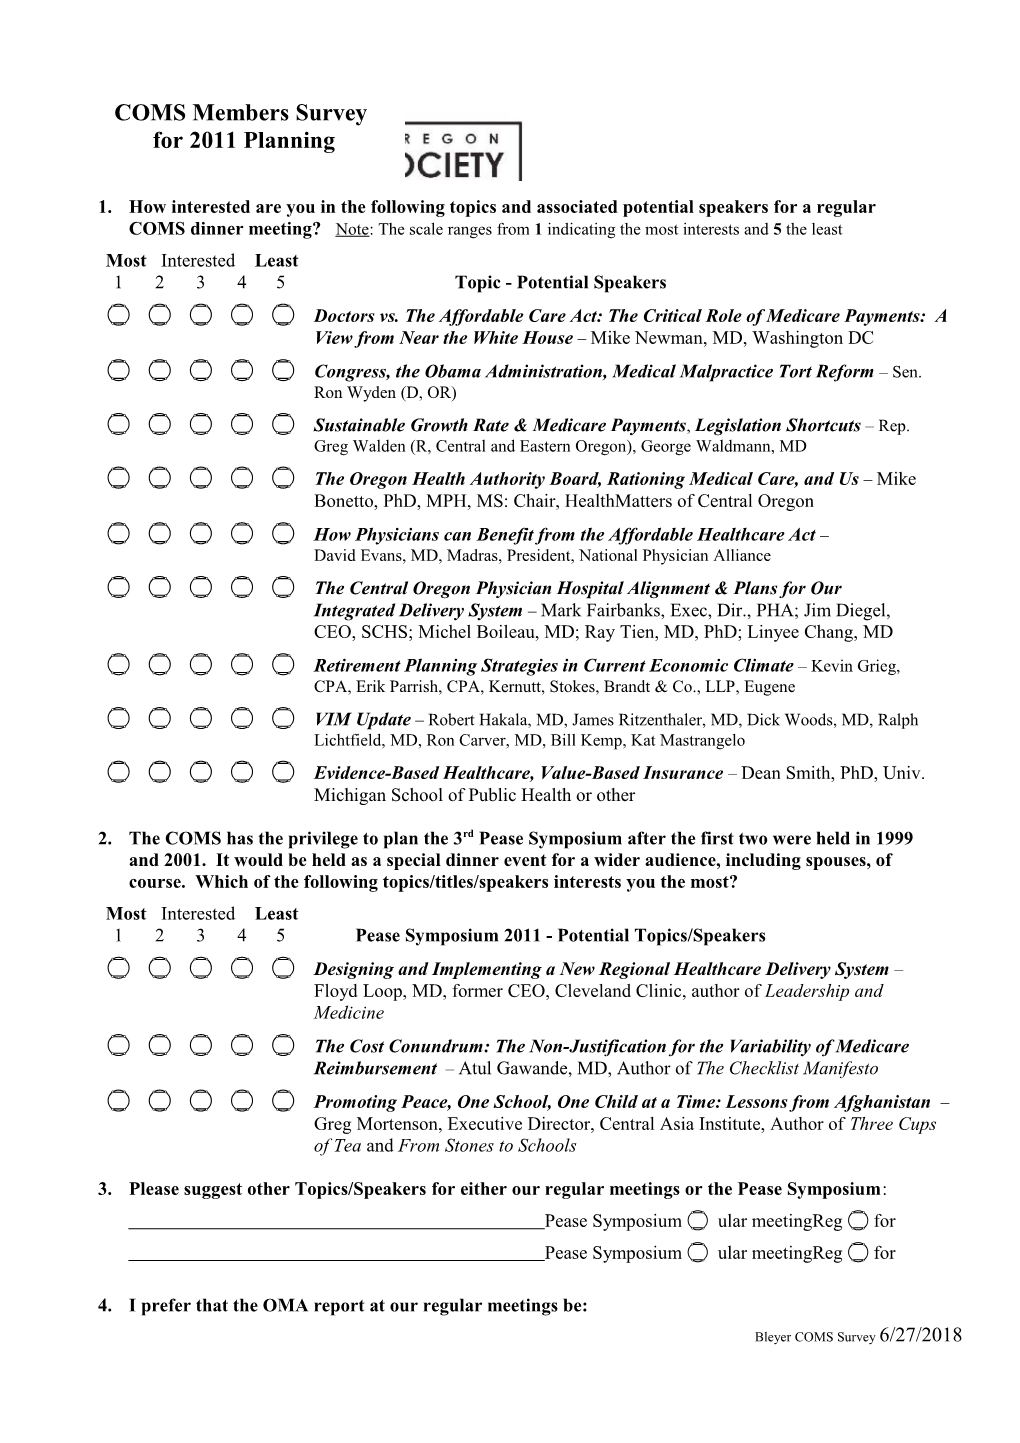 COMS Members Survey 2009